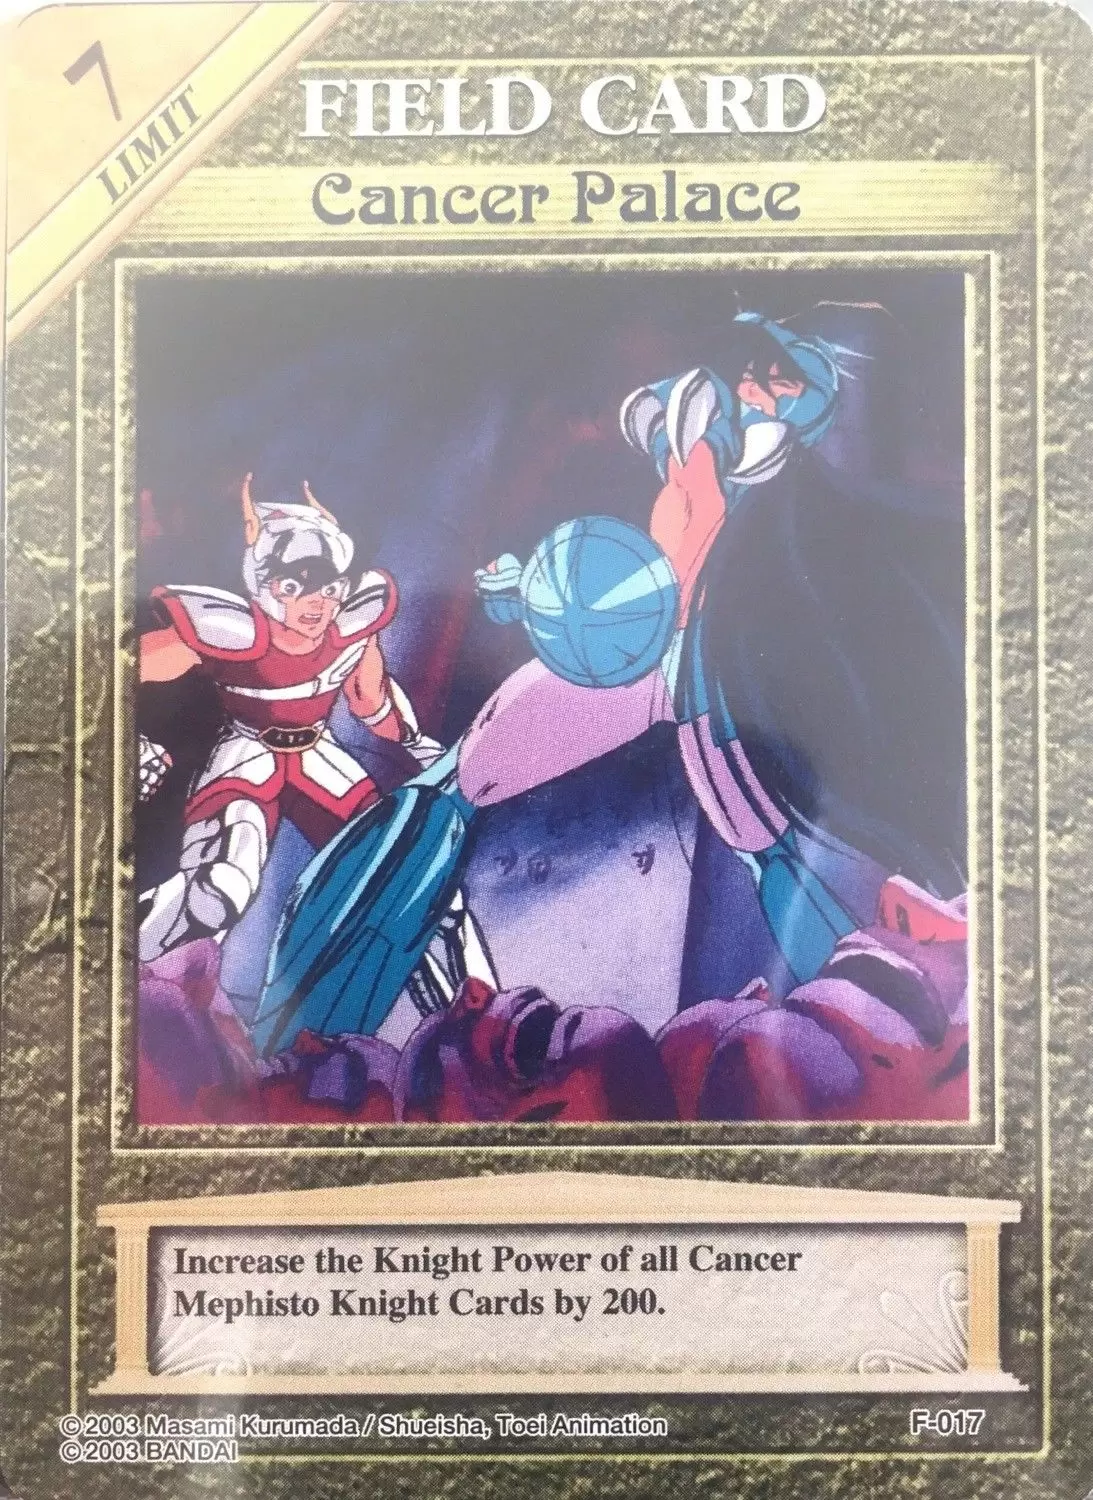 Knights of Zodiac - Cancer Palace